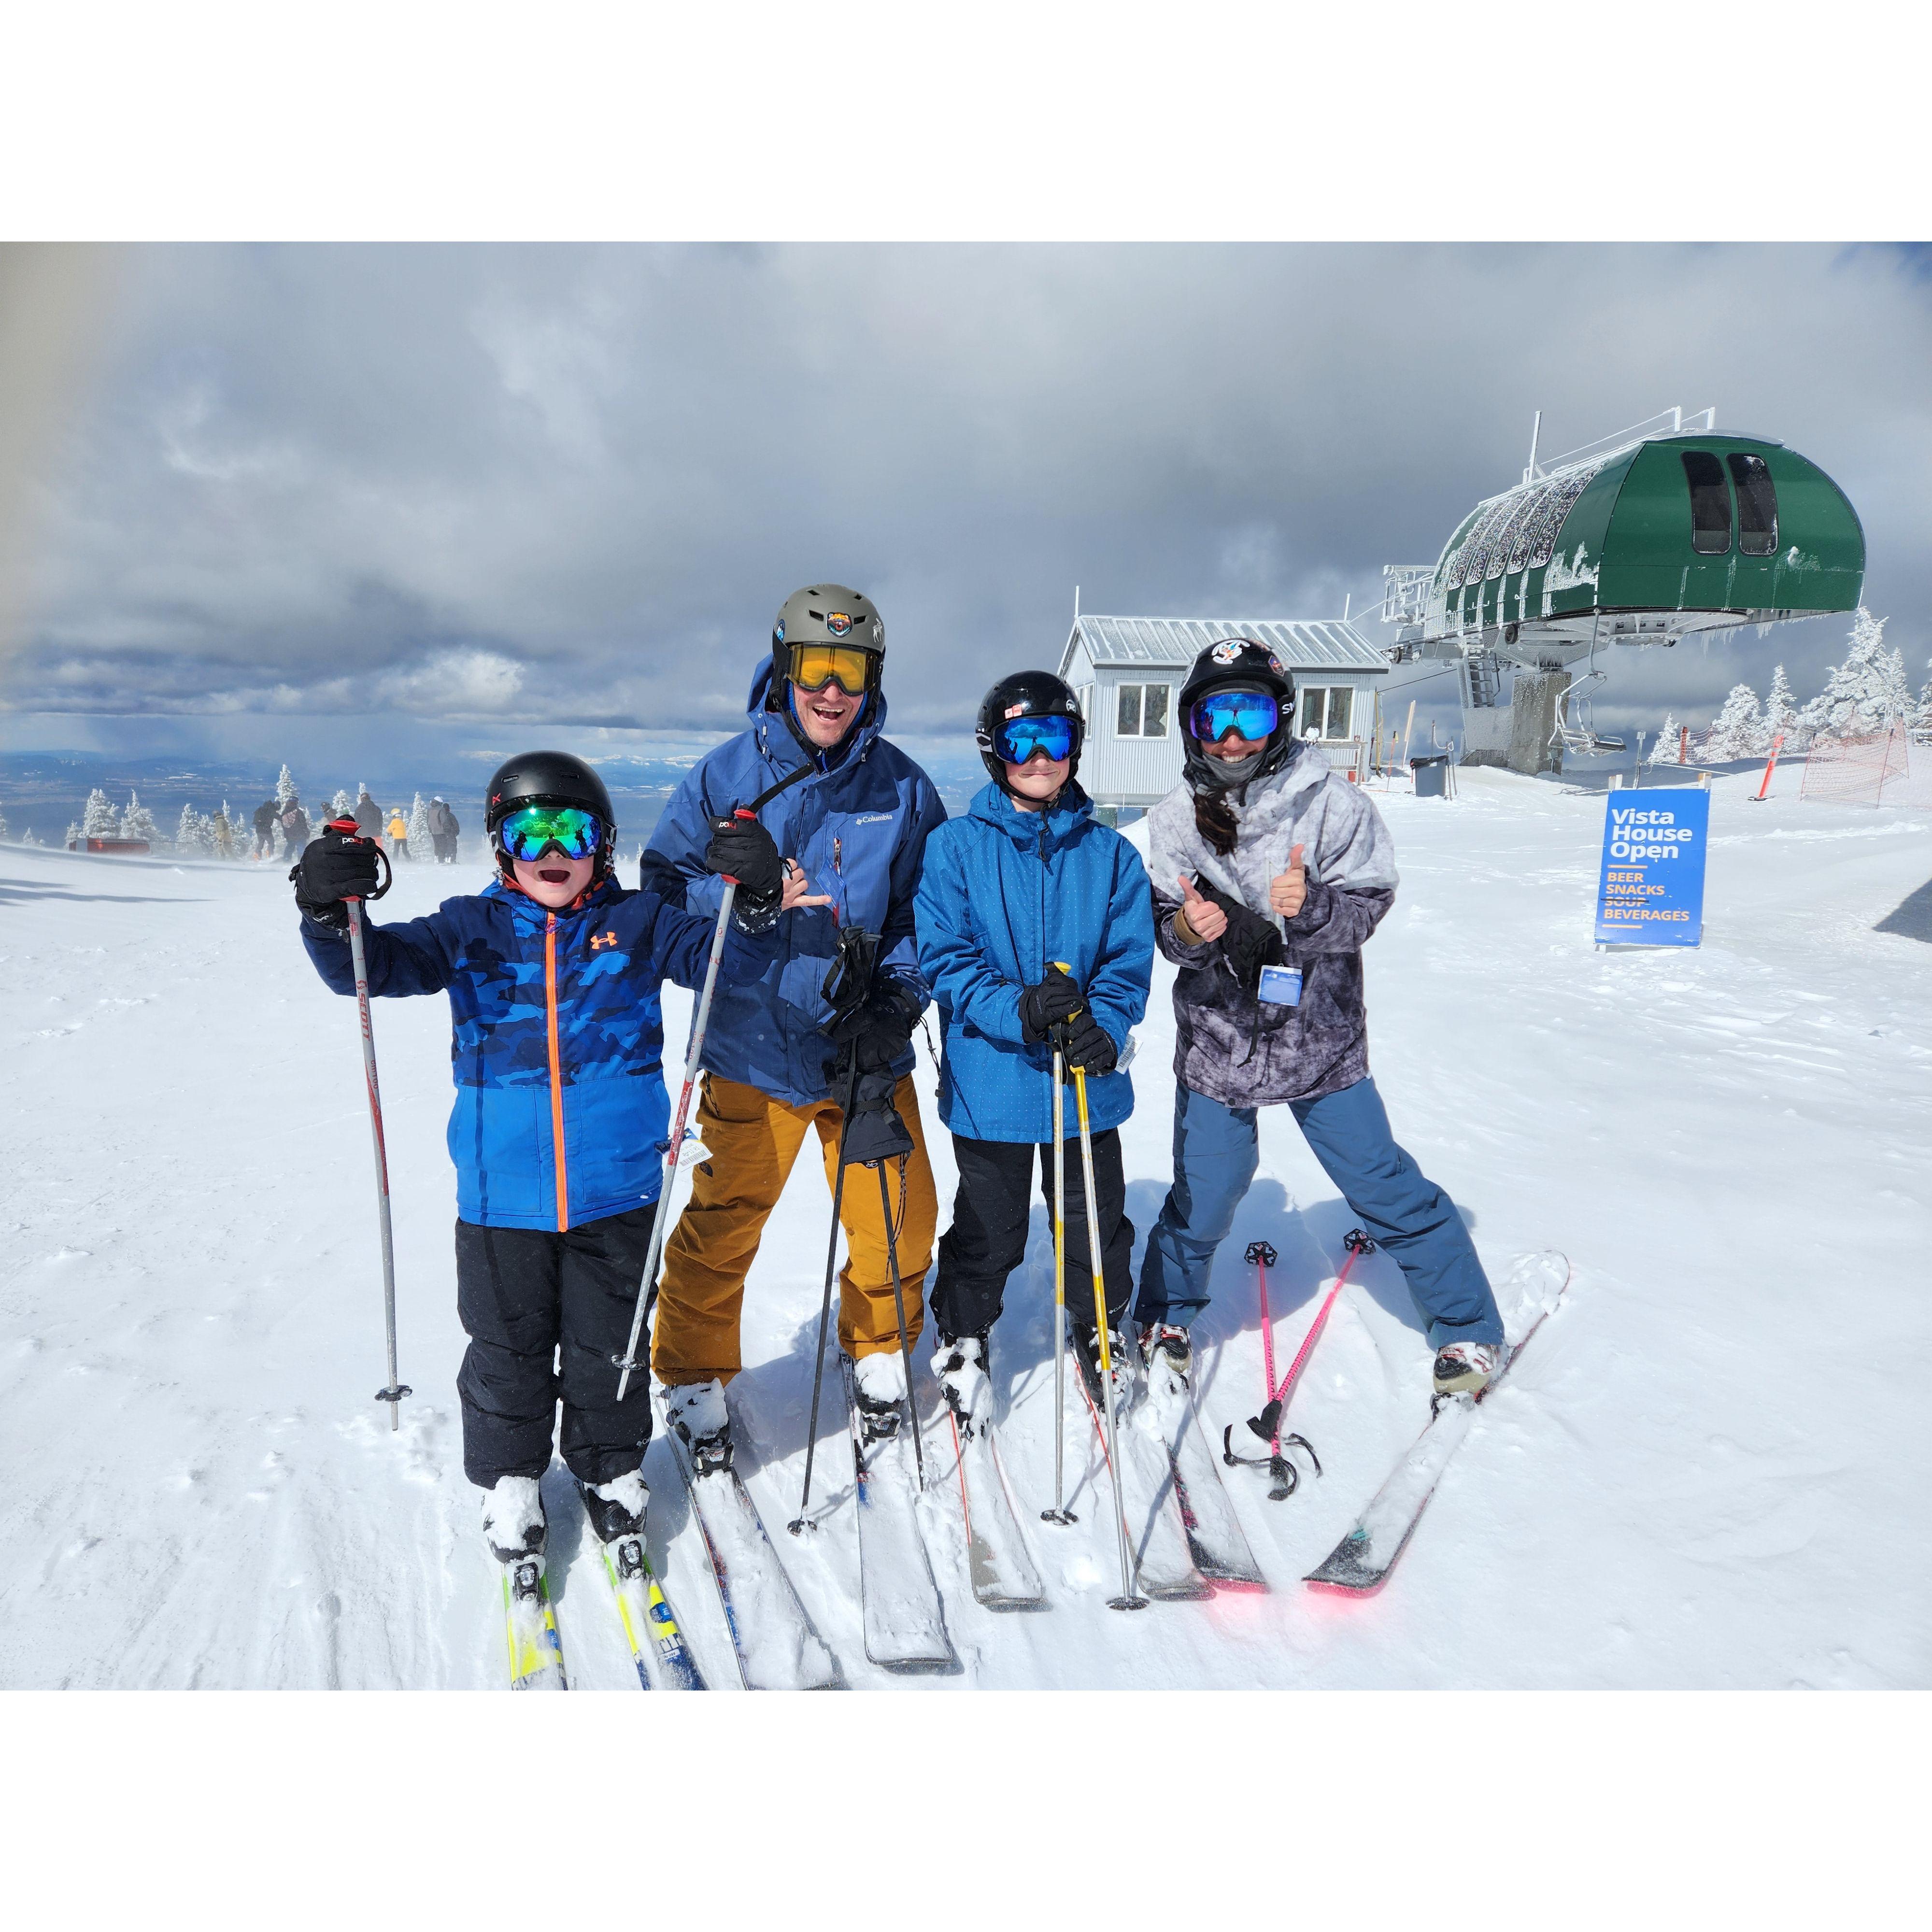 First ski trip w/ the kids